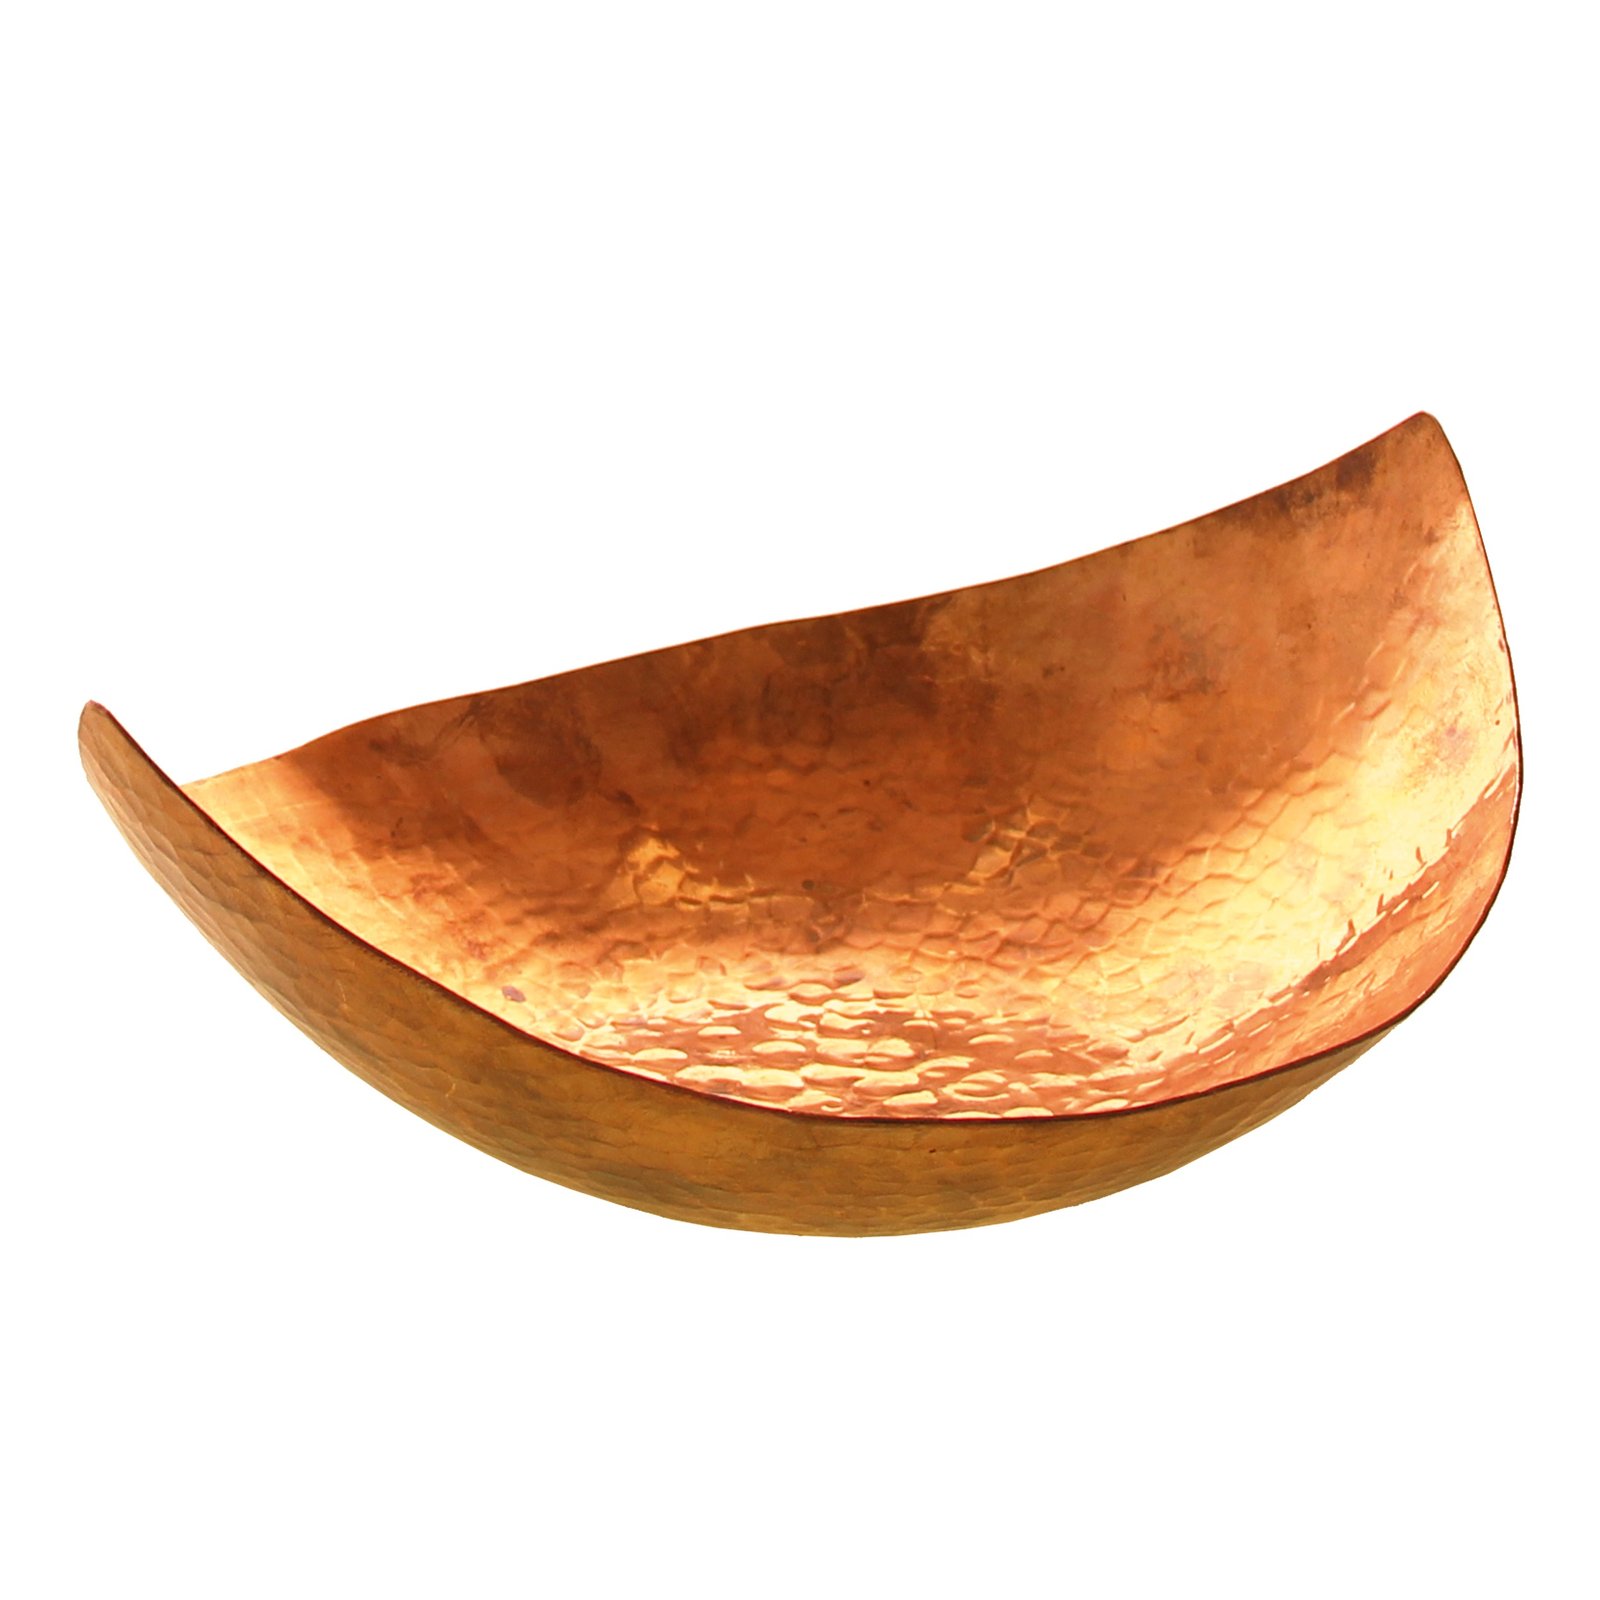 Handicraft Copper bowl rhombus model code 4156,acheter des objets artisanaux en cuivre,acheter des objets en cuivre